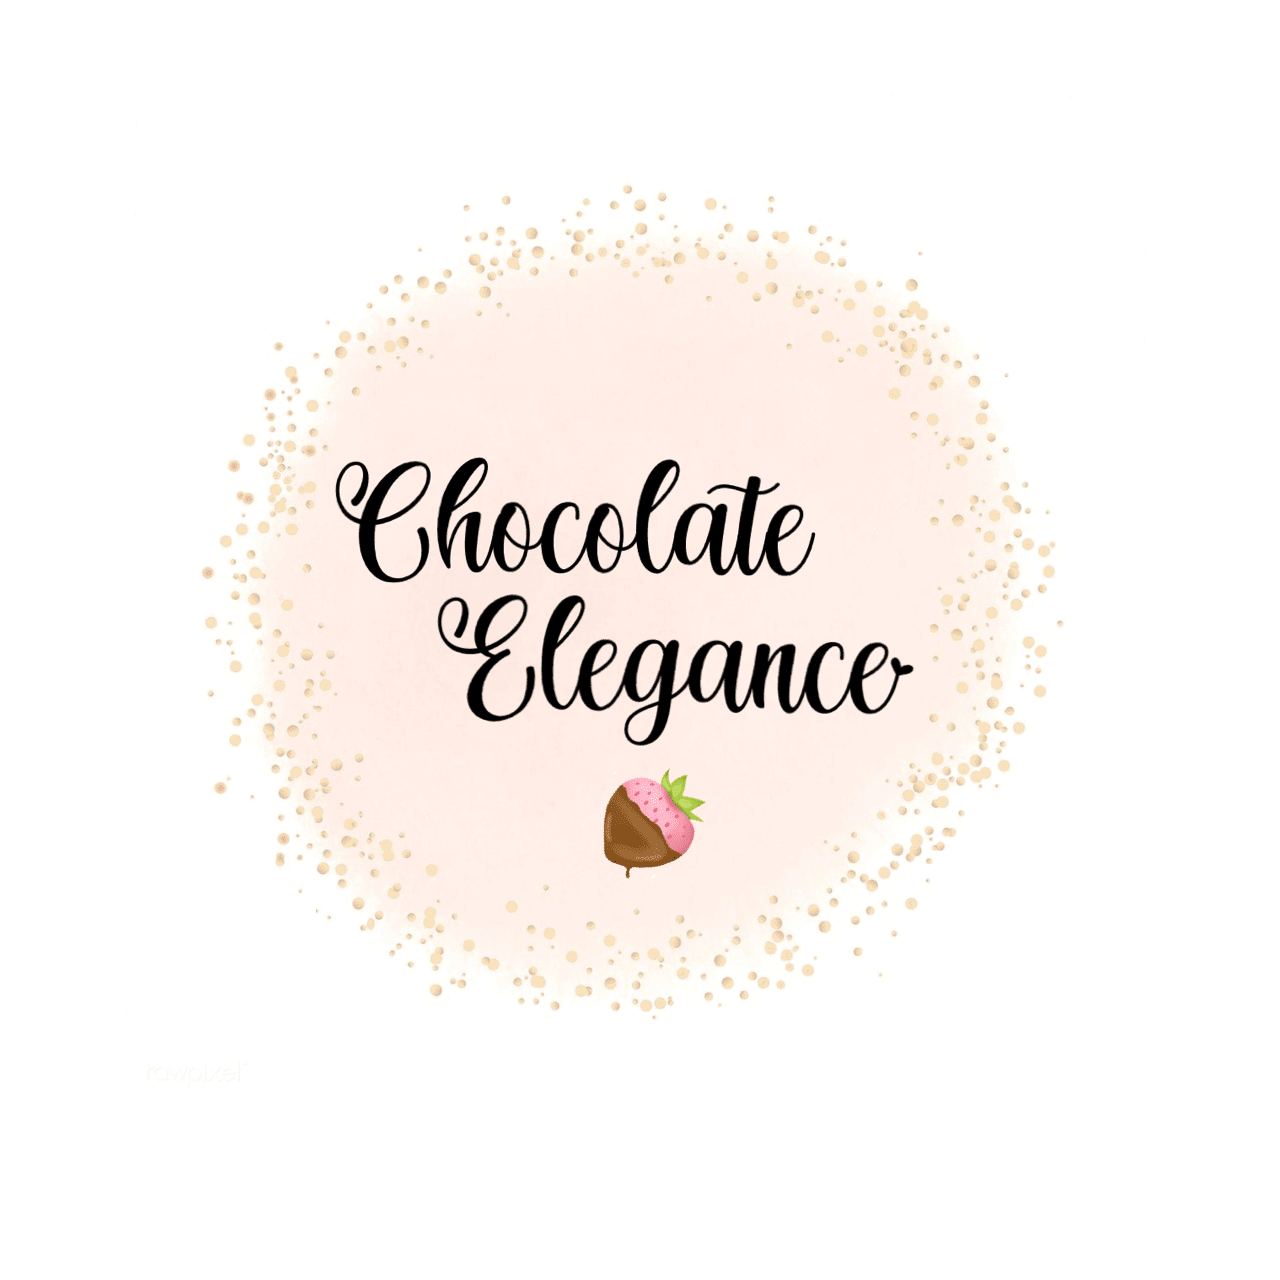 Chocolate Elegance